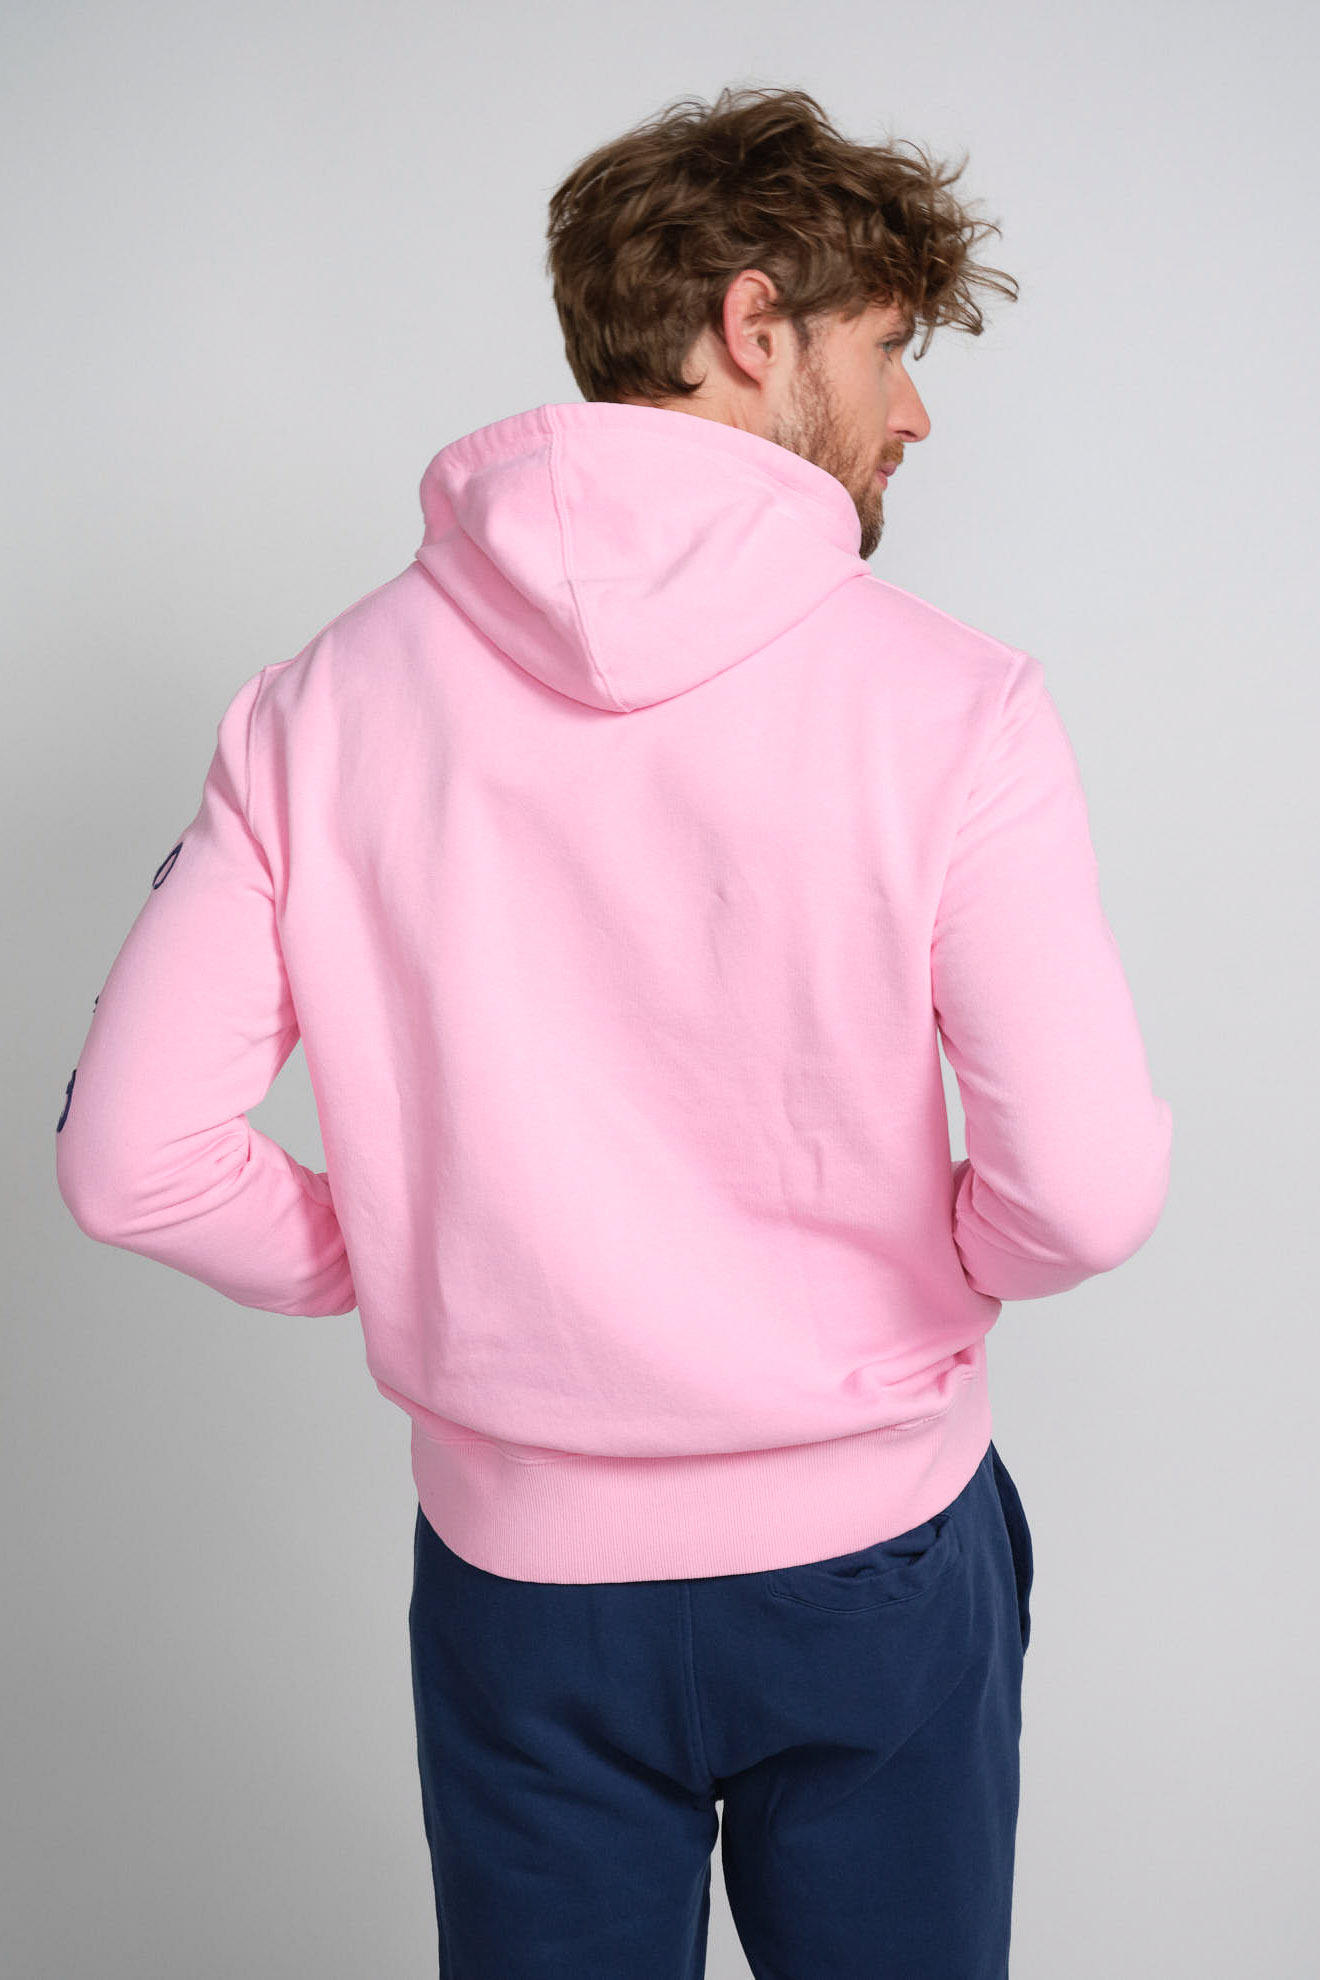 st.barth hoodie pink branded cotton model back